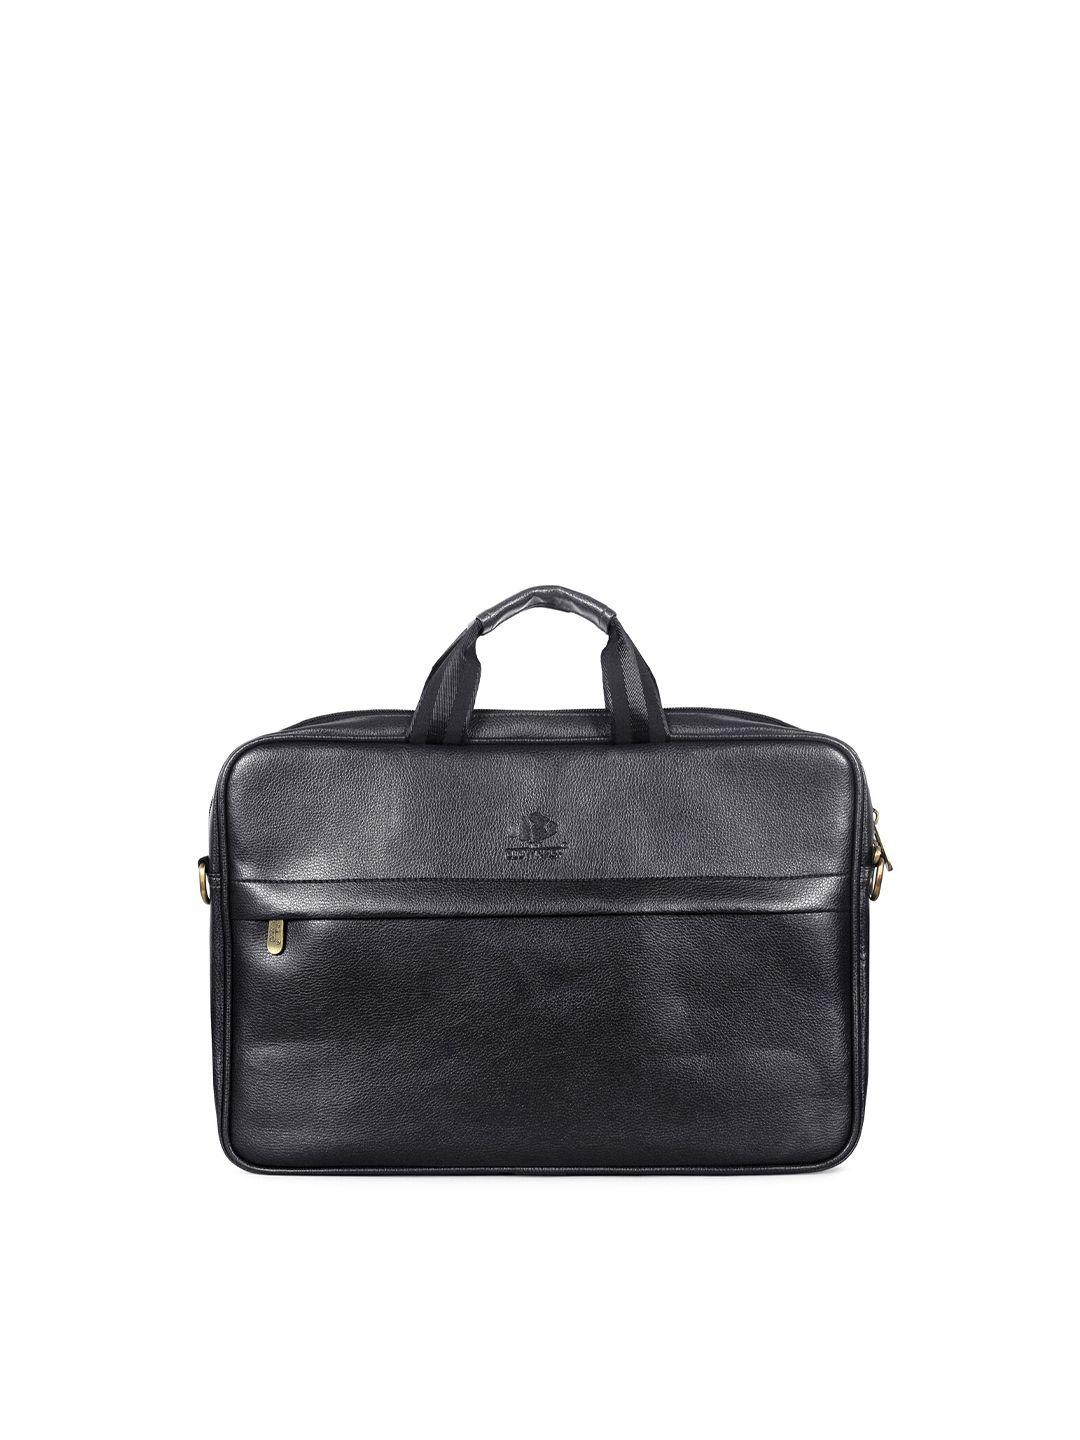 the clownfish unisex black leather laptop bag